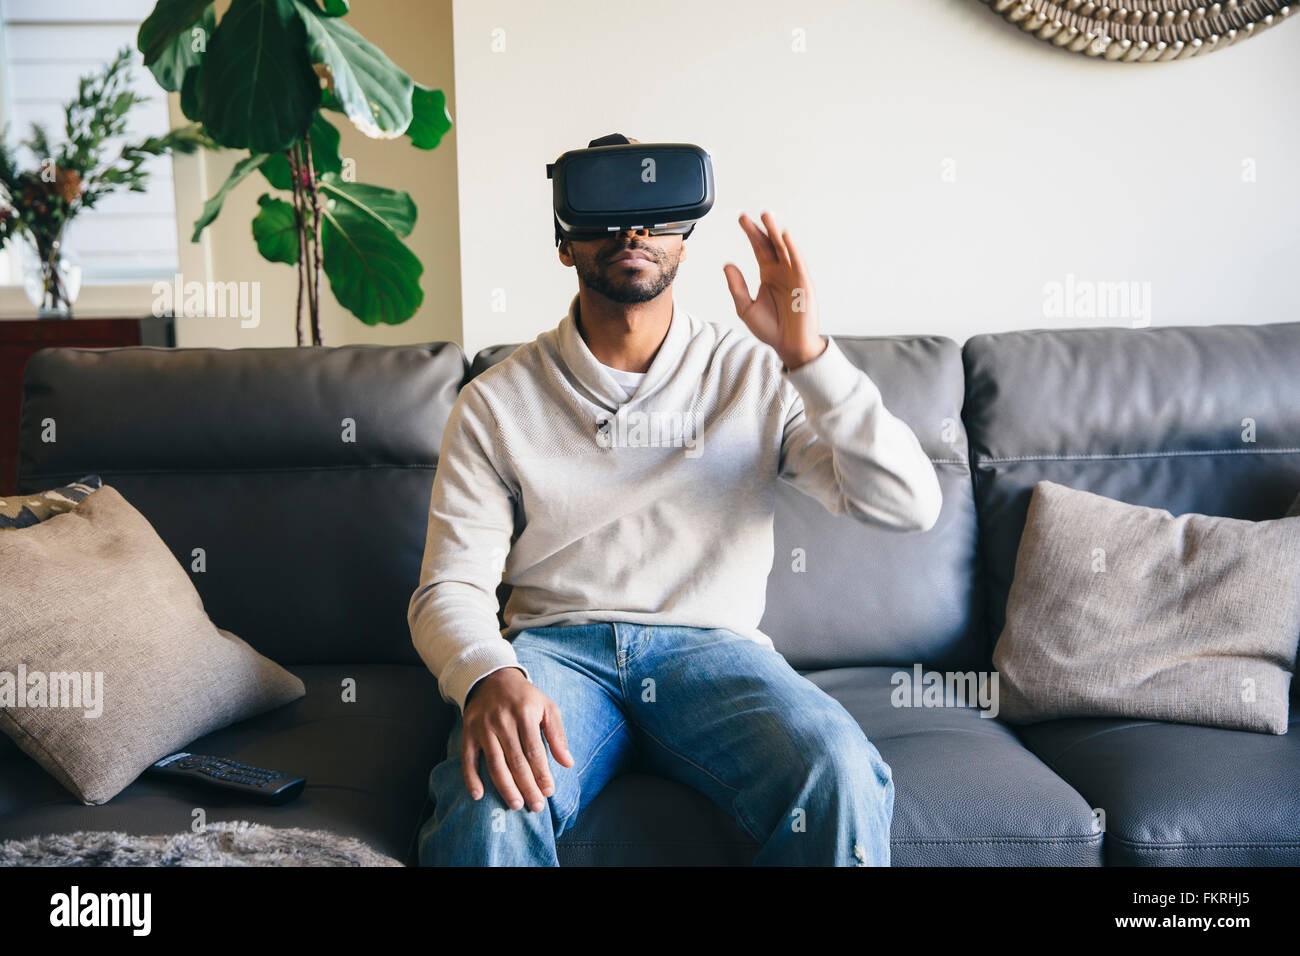 Mixed race man using virtual reality goggles Stock Photo